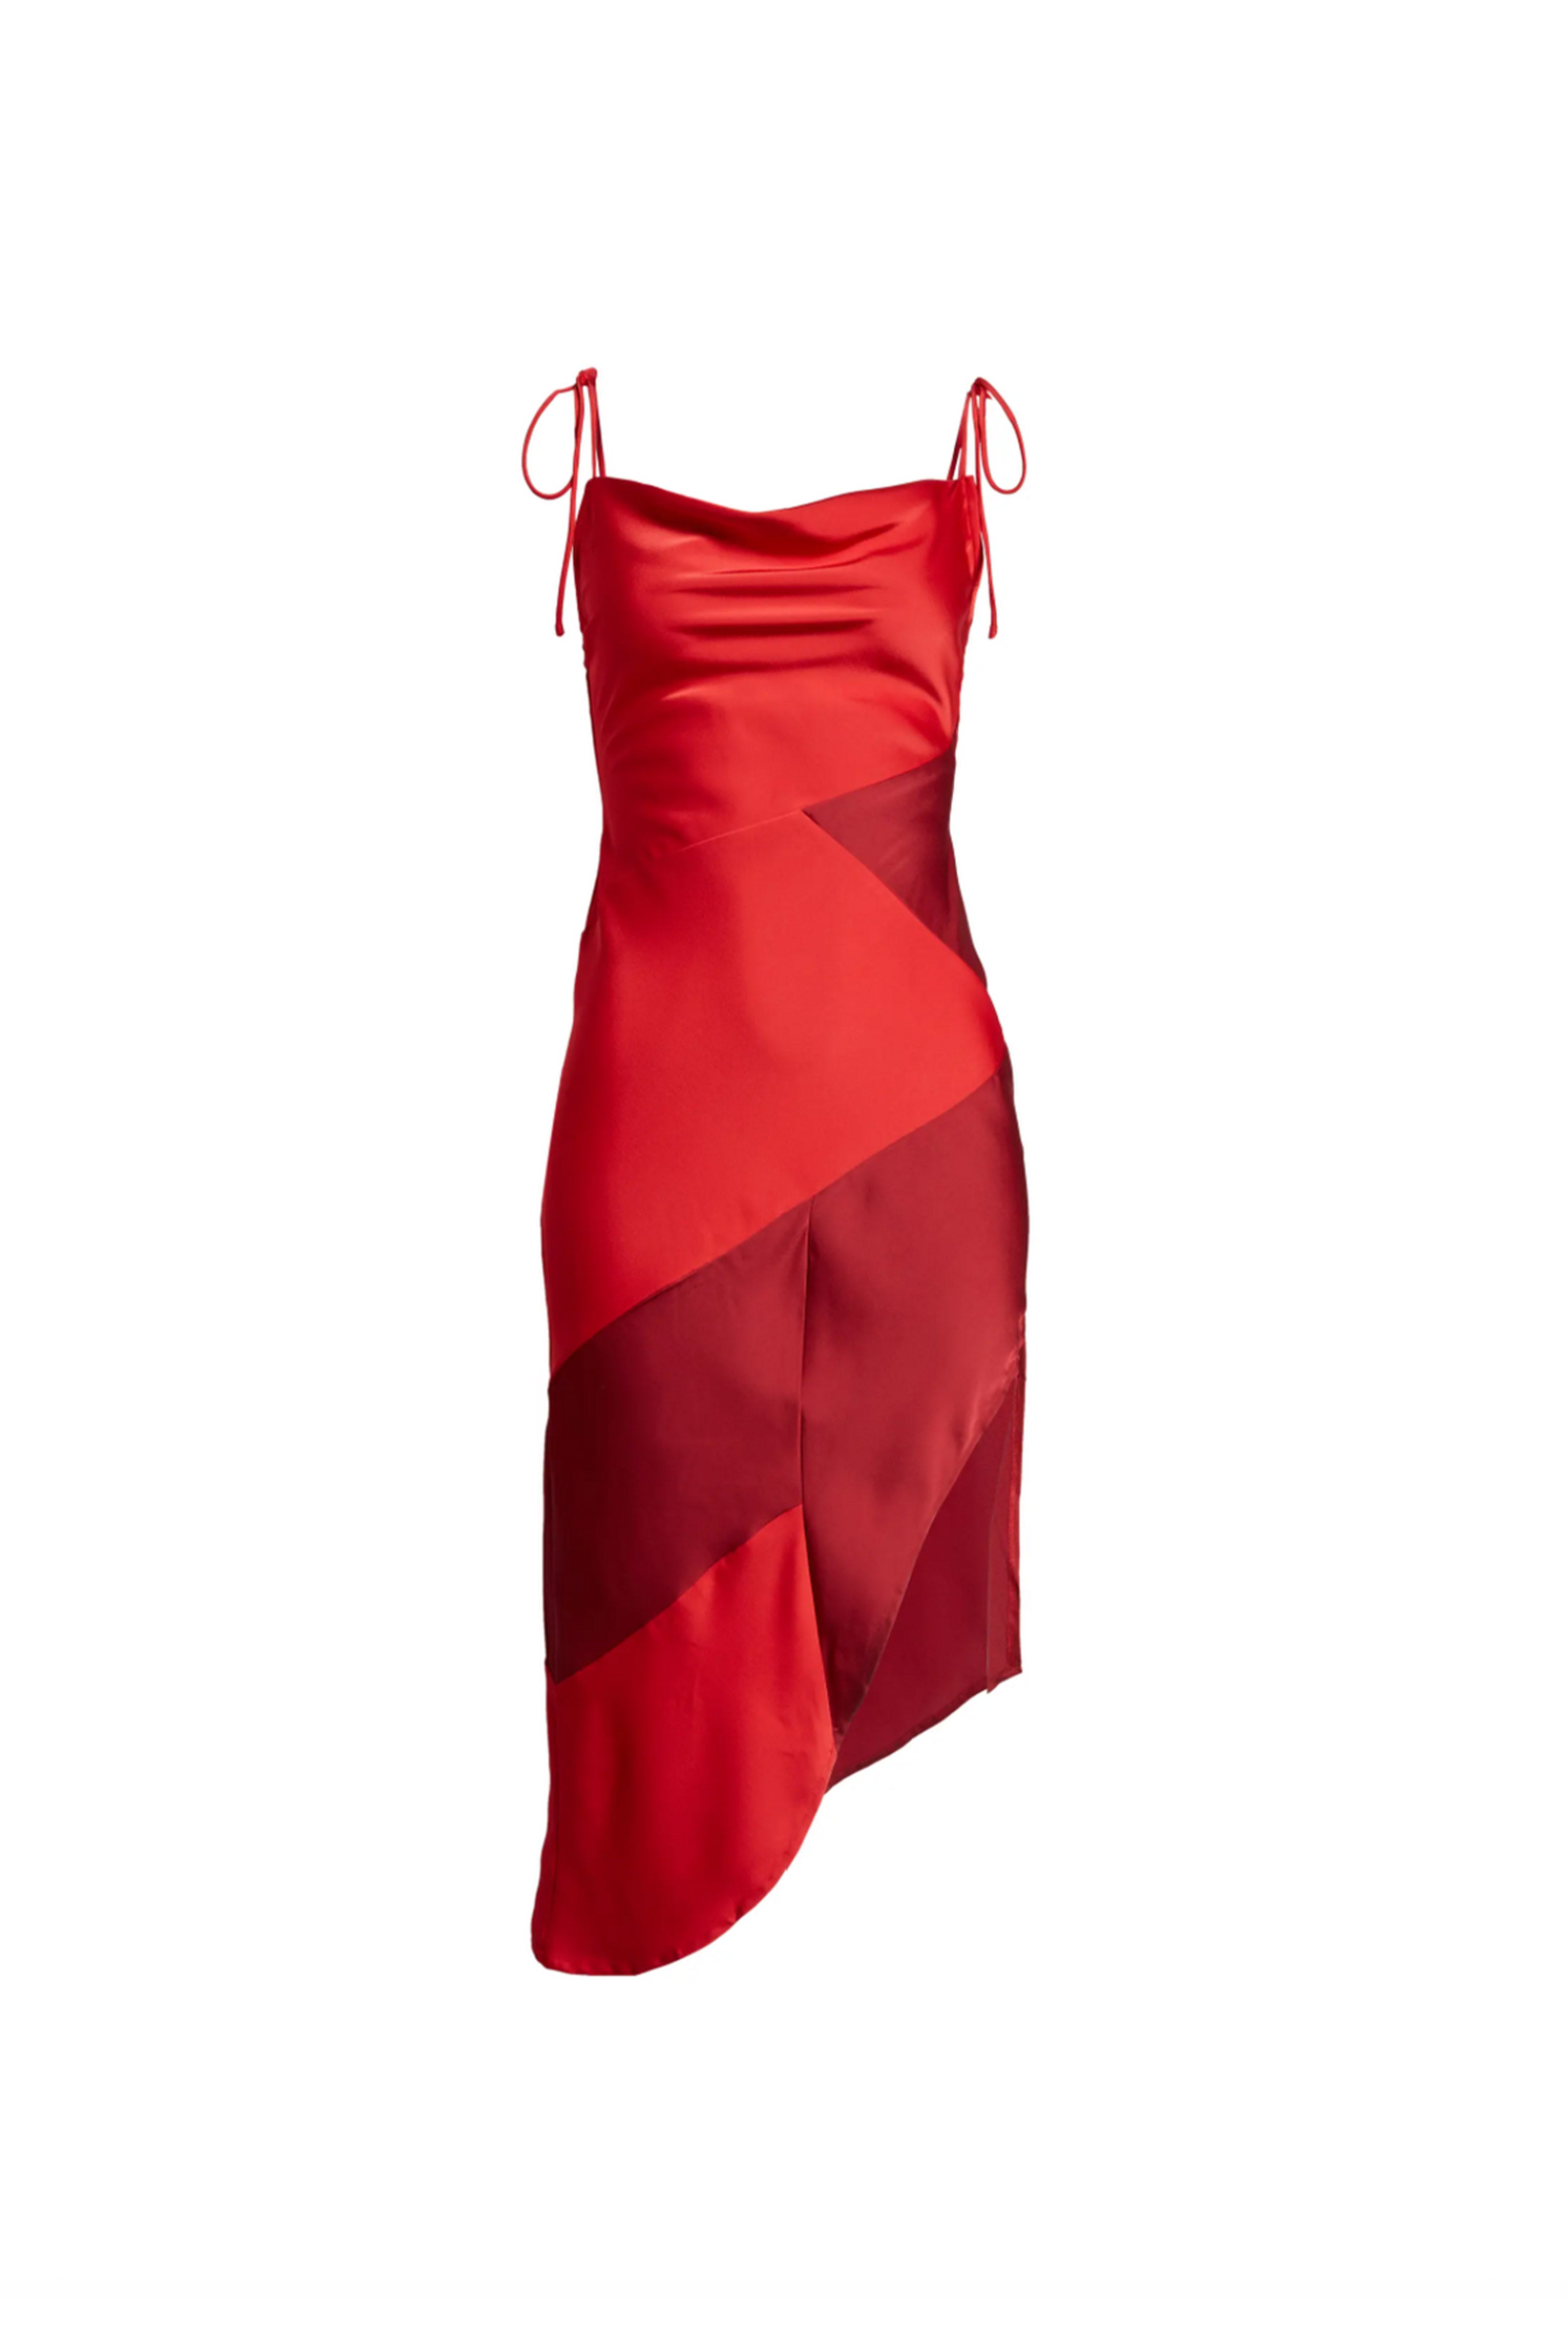 Gracie Red Colour Block Satin Slip Dress